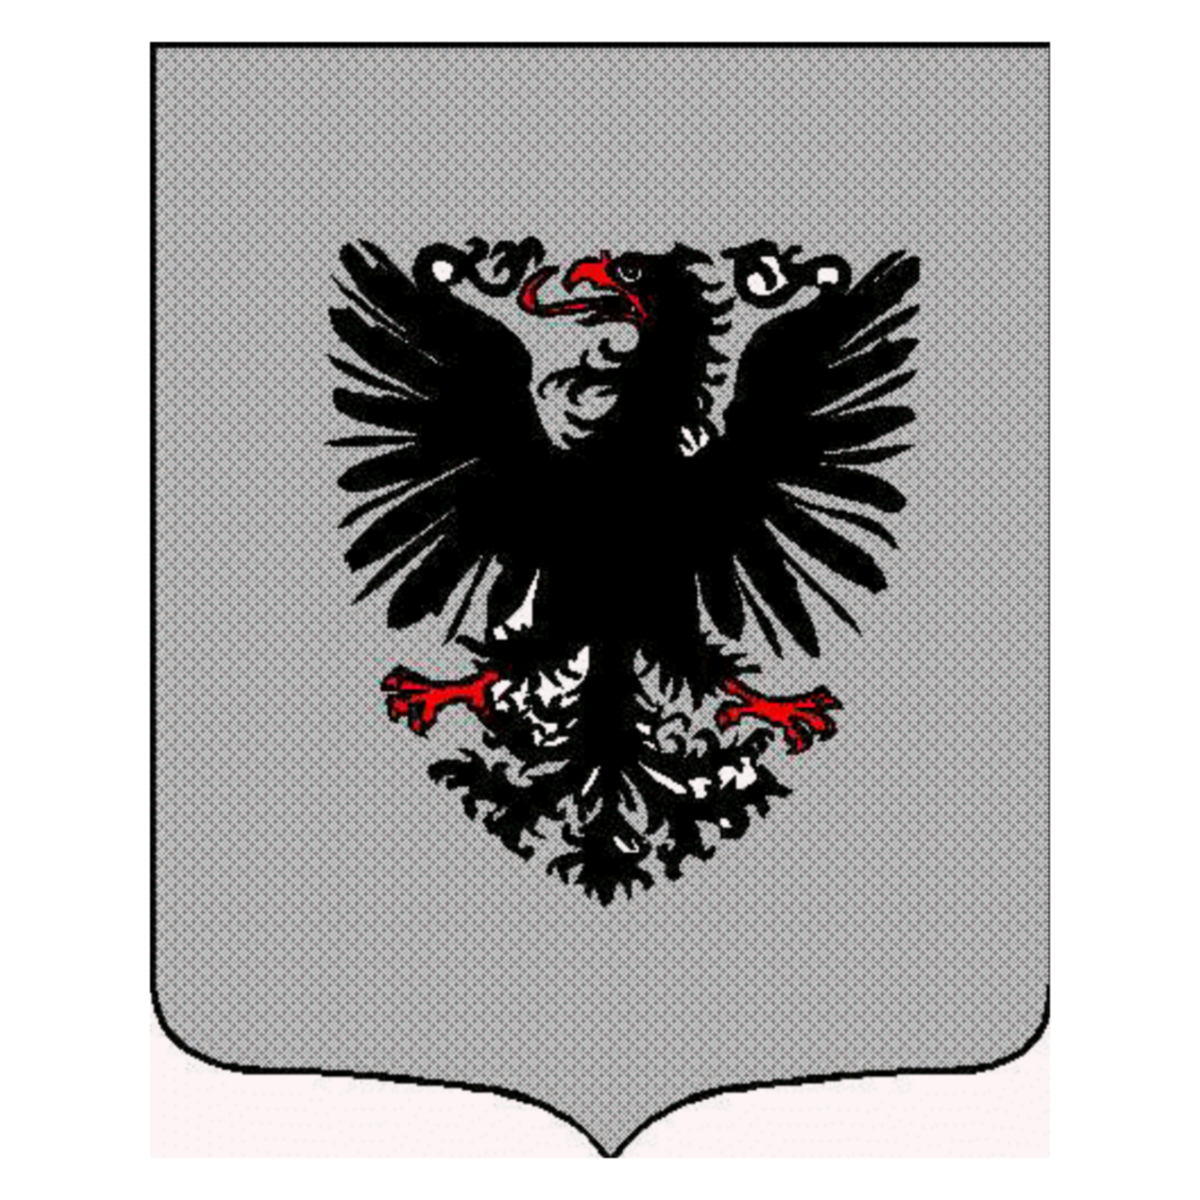 Coat of arms of family Leva